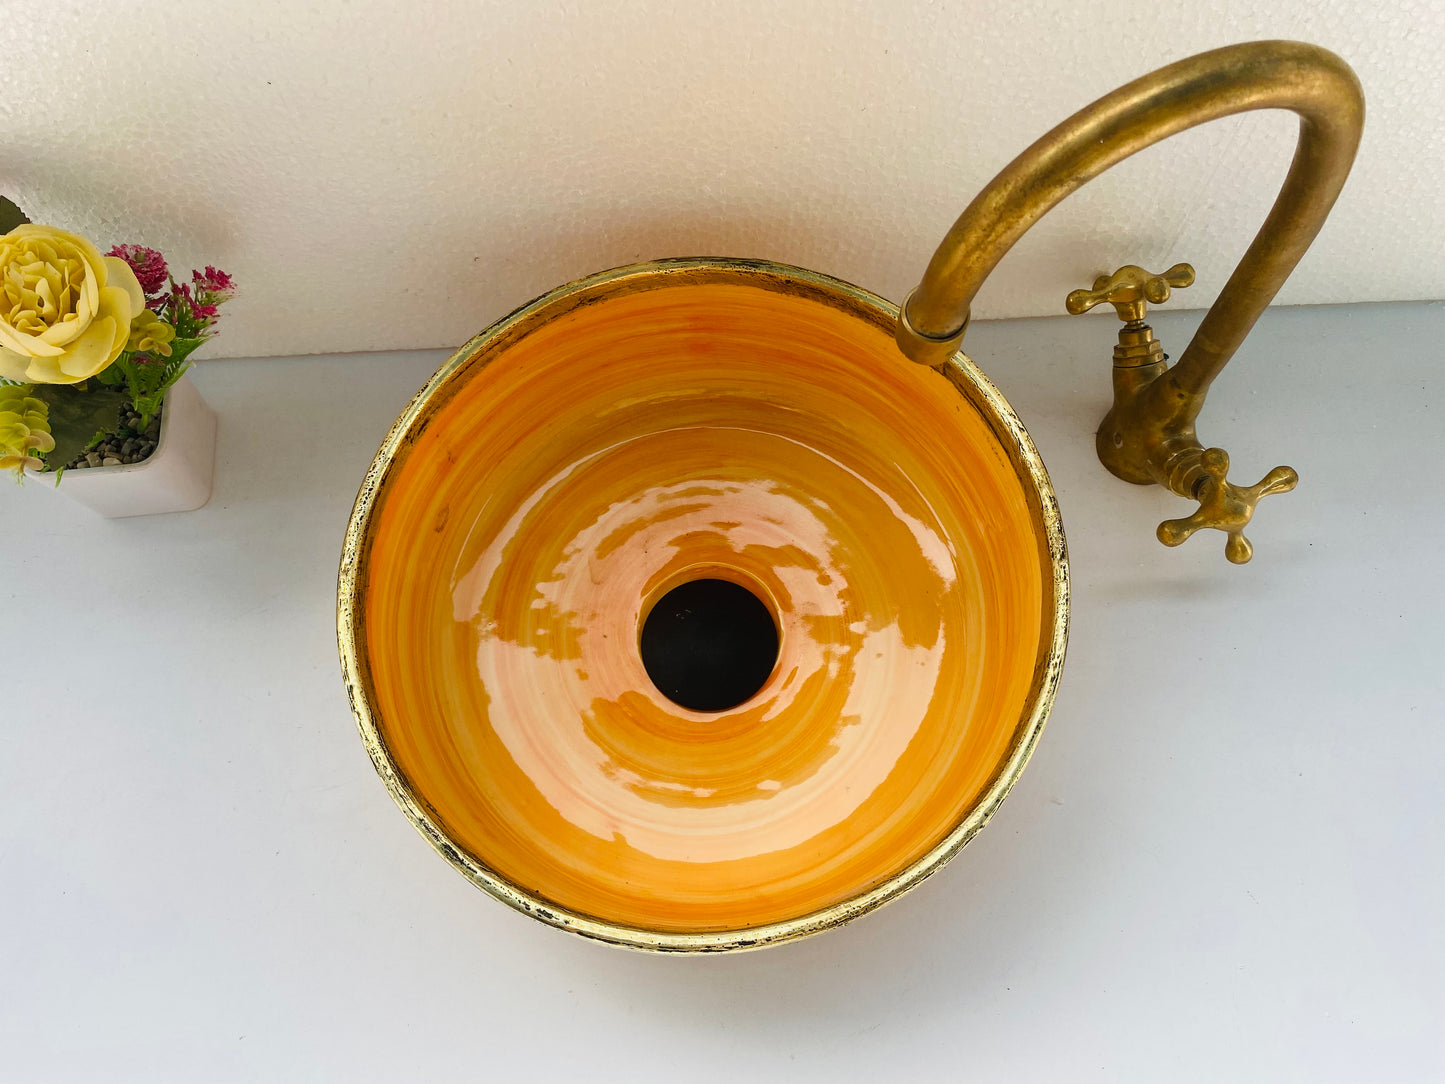 Orange bathroom sink - Brushed Solid Brass Rimmed Basin -  Basin with Mid-Century Modern - blue ceramic sink Artisanal Farmhouse  Basin